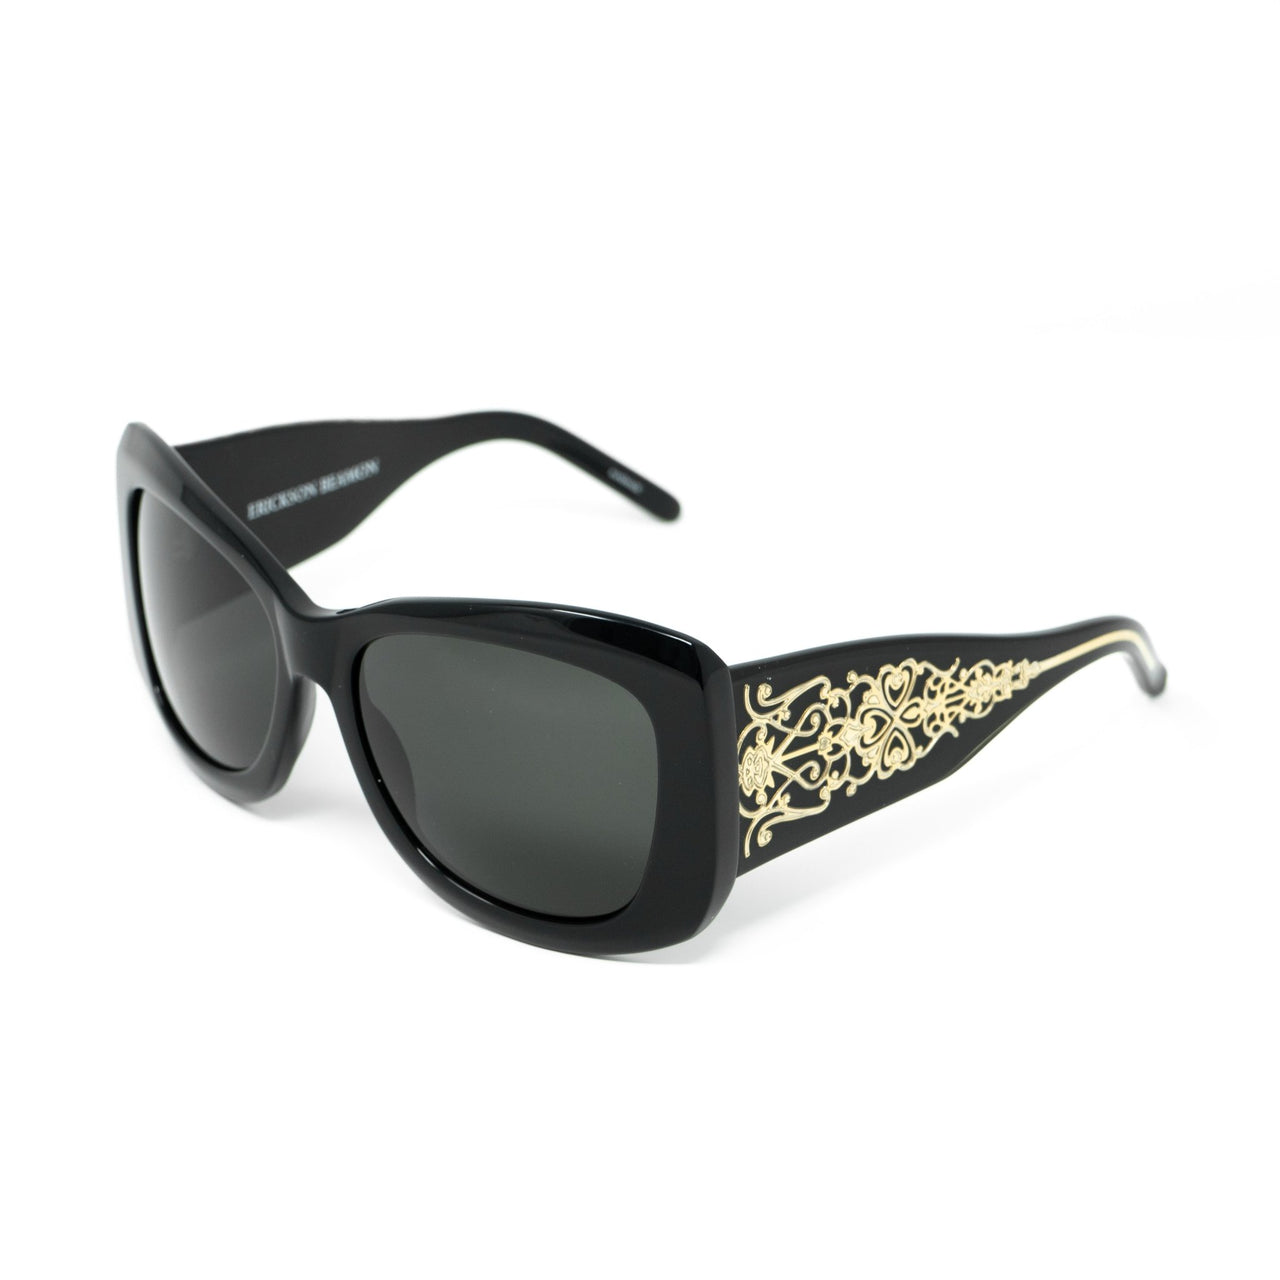 Multicolor Retro Square Rhinestone Sunglasses For Women With UV Protection,  Oversized Big Frame, Funny Stripe Design, And Box From Ppfashionshop,  $16.99 | DHgate.Com